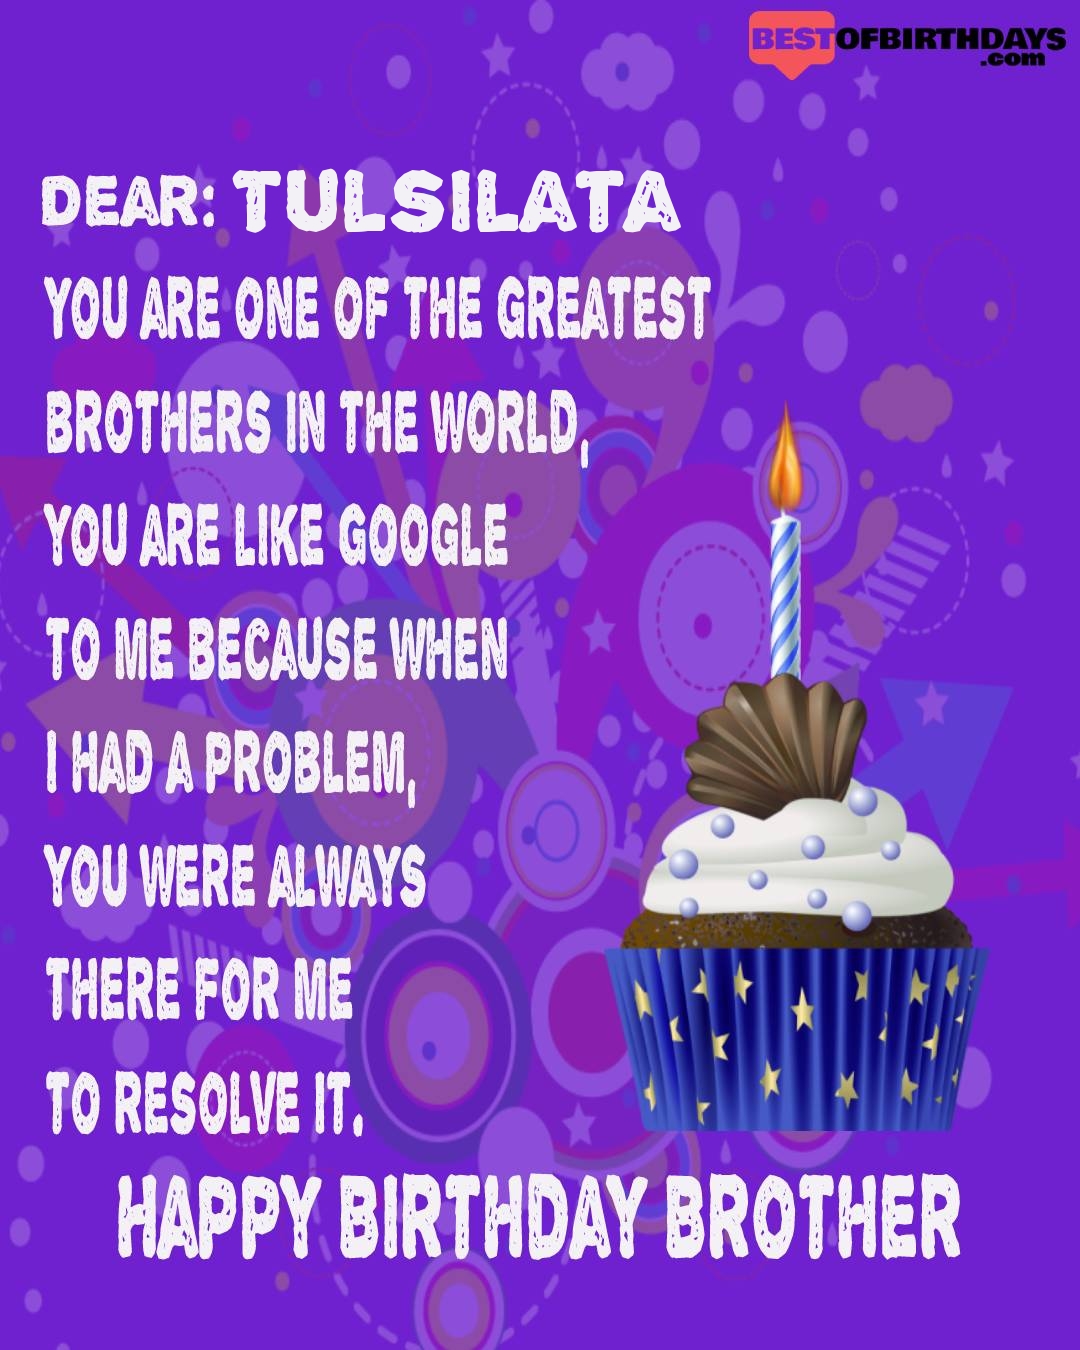 Happy birthday tulsilata bhai brother bro